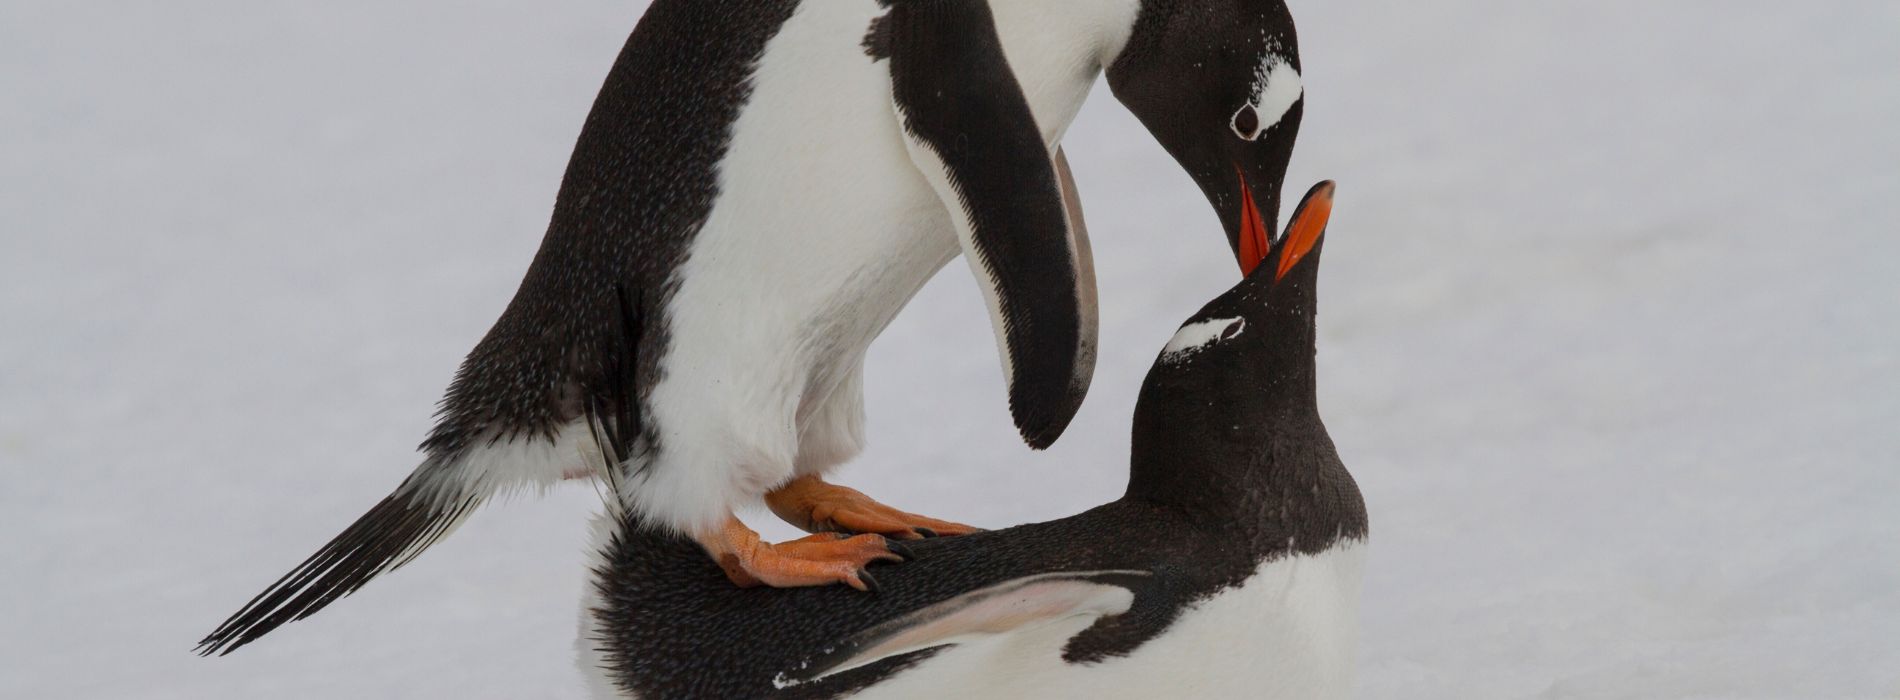 Do penguins mate for life?